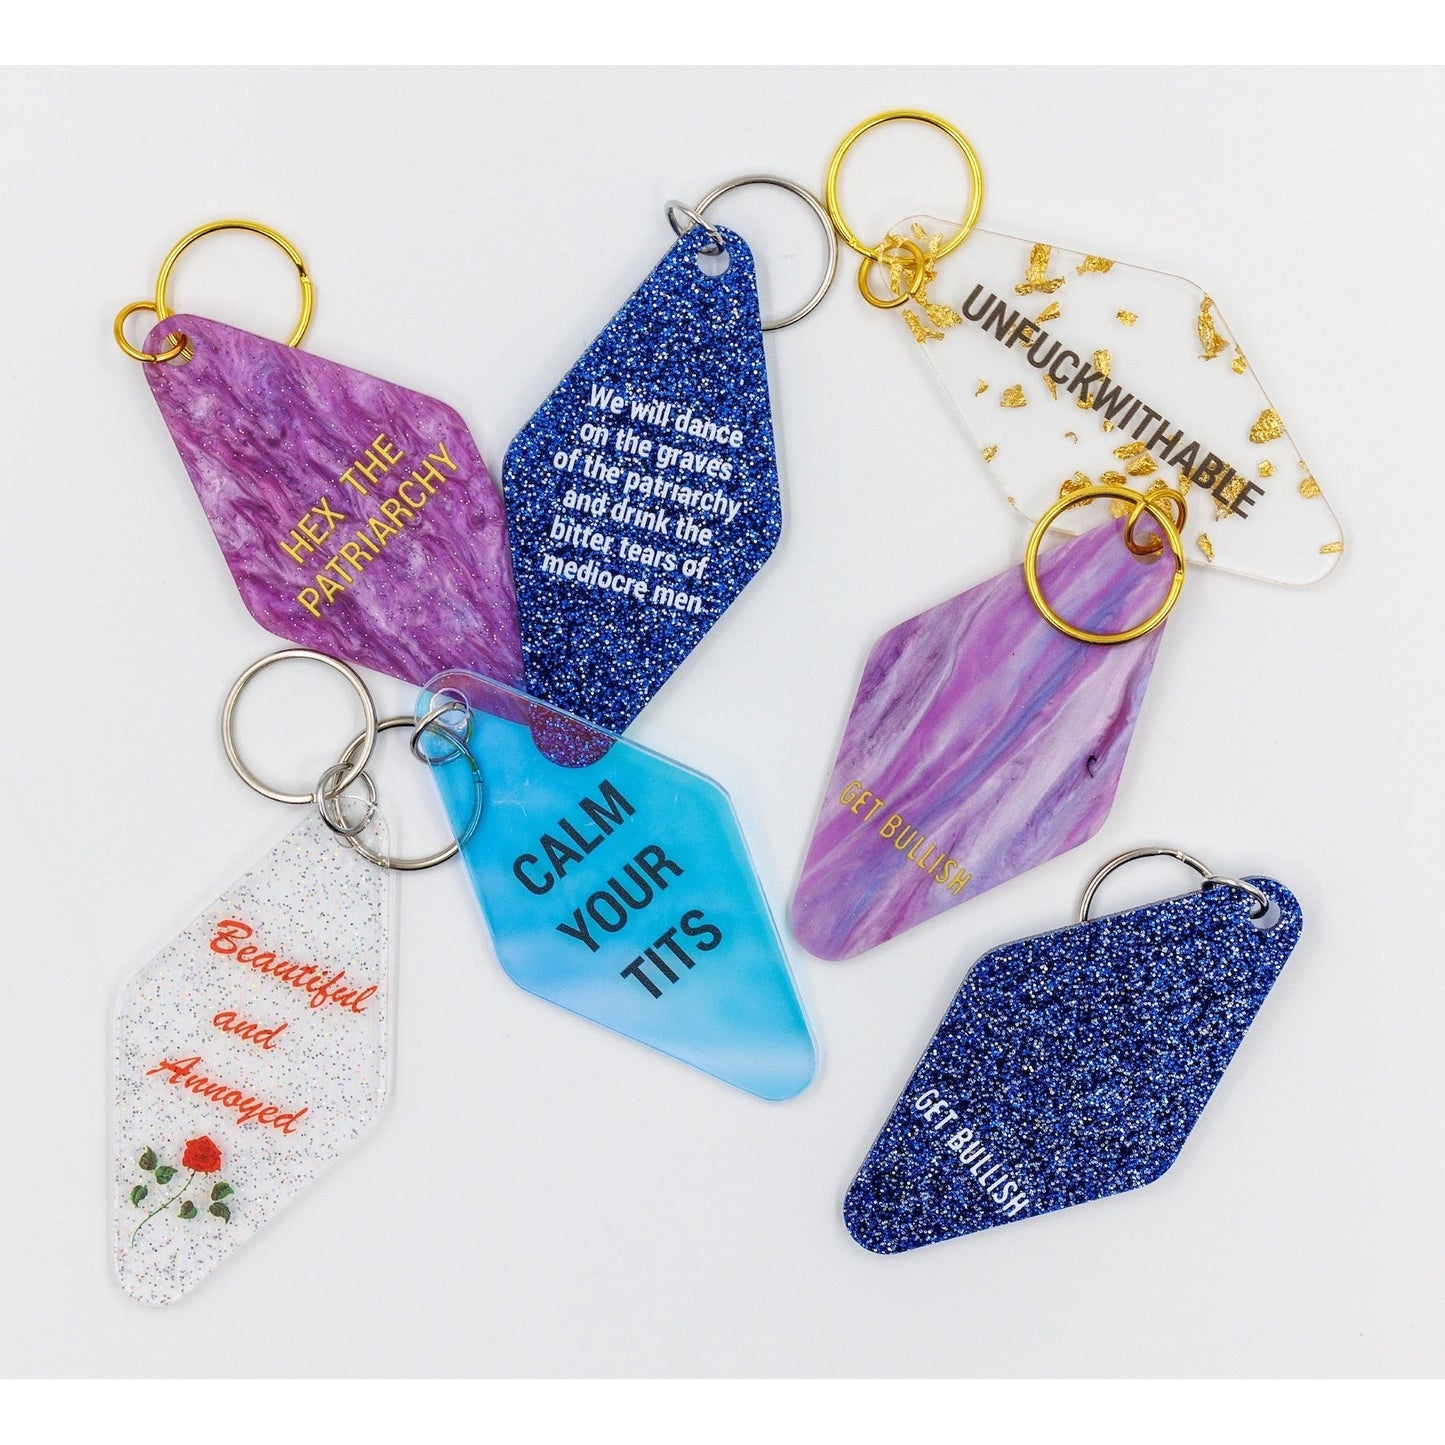 Hex the Patriarchy Feminist Motel Style Key Tag Keychain in Purple Galaxy Glitter